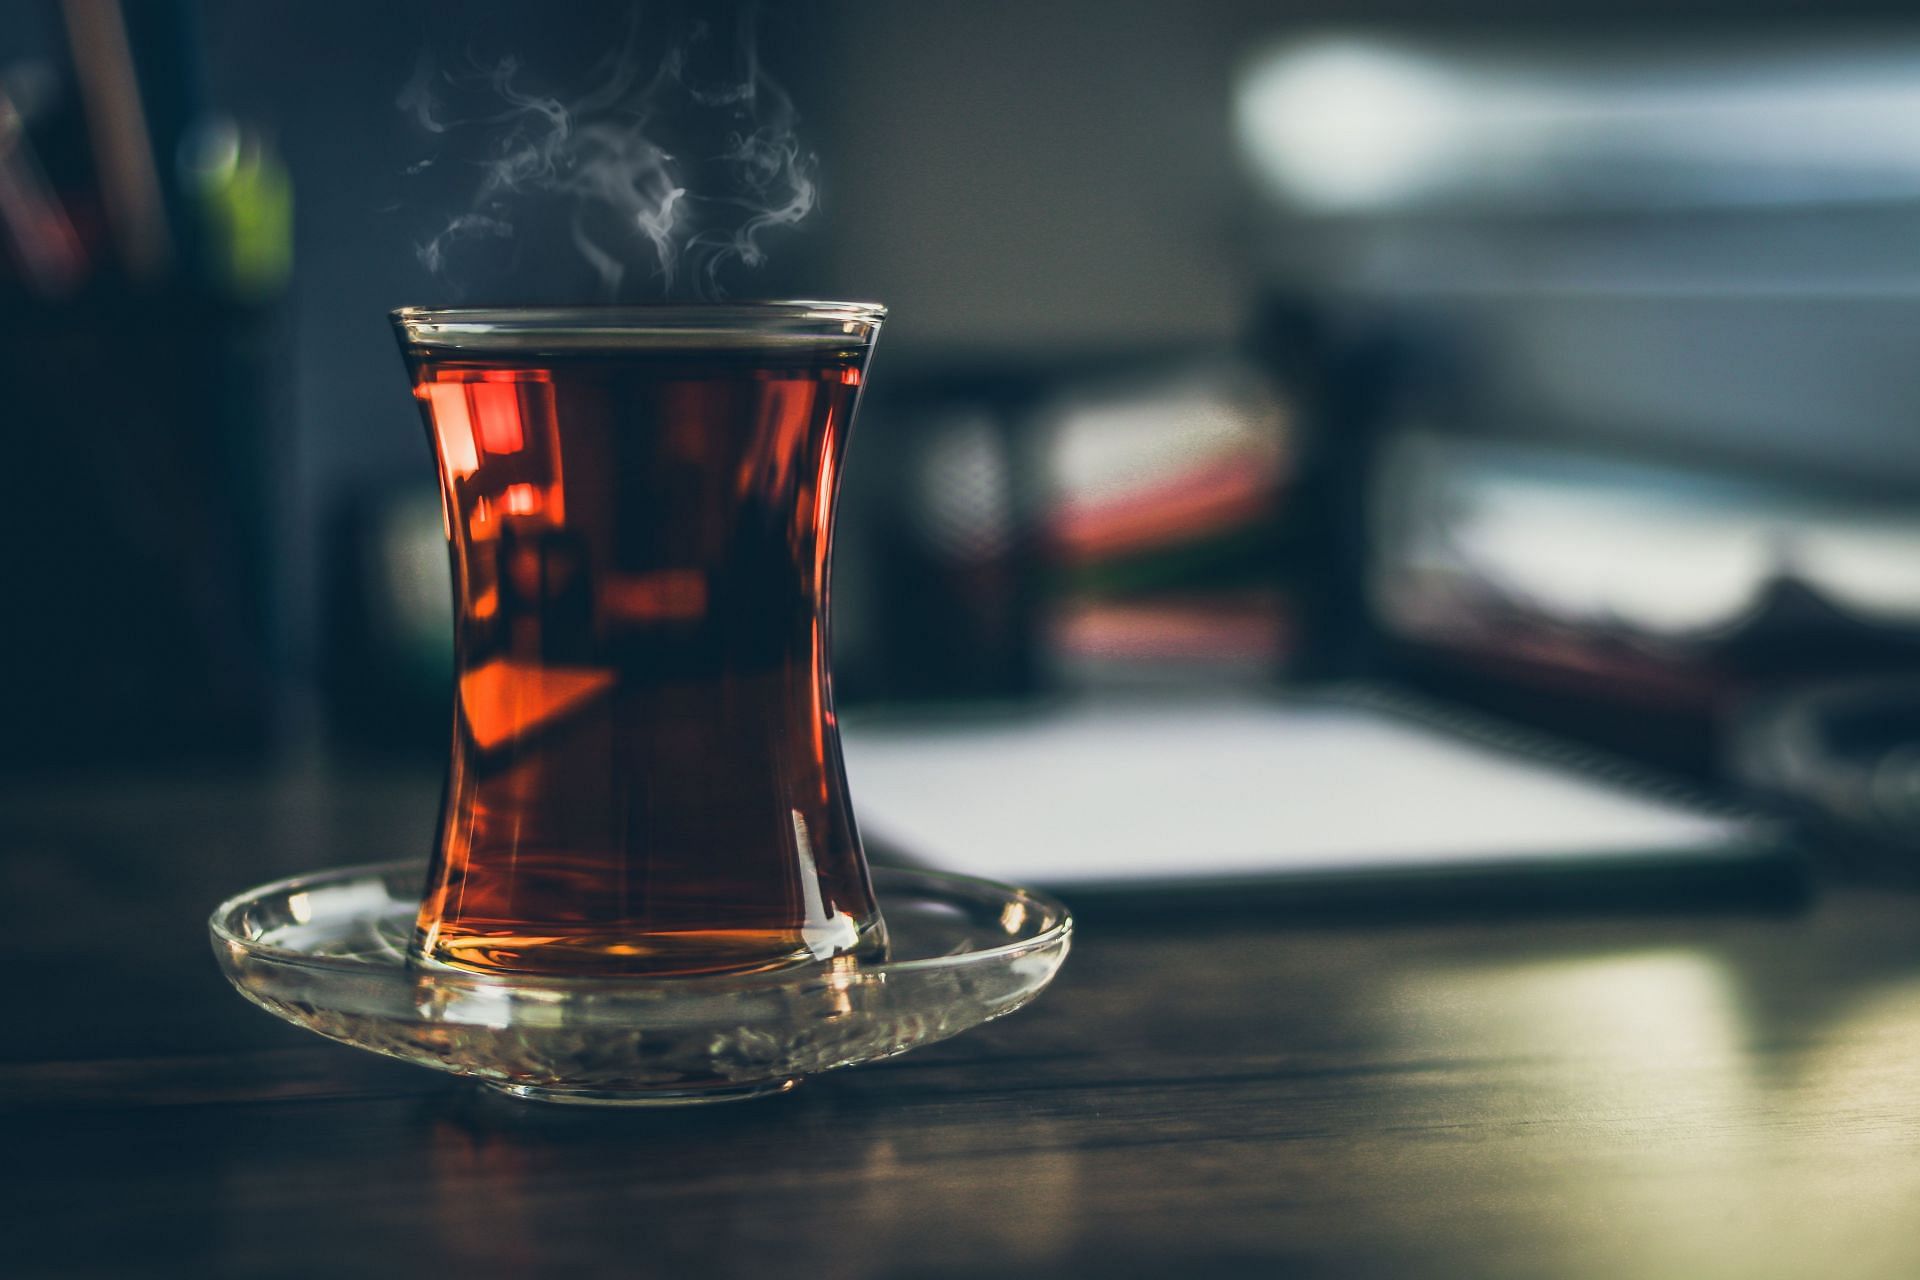 Treatments for diarrhea: Drinking tea can help with the diarrhea. (Image via Pexels / Hasan Albari)